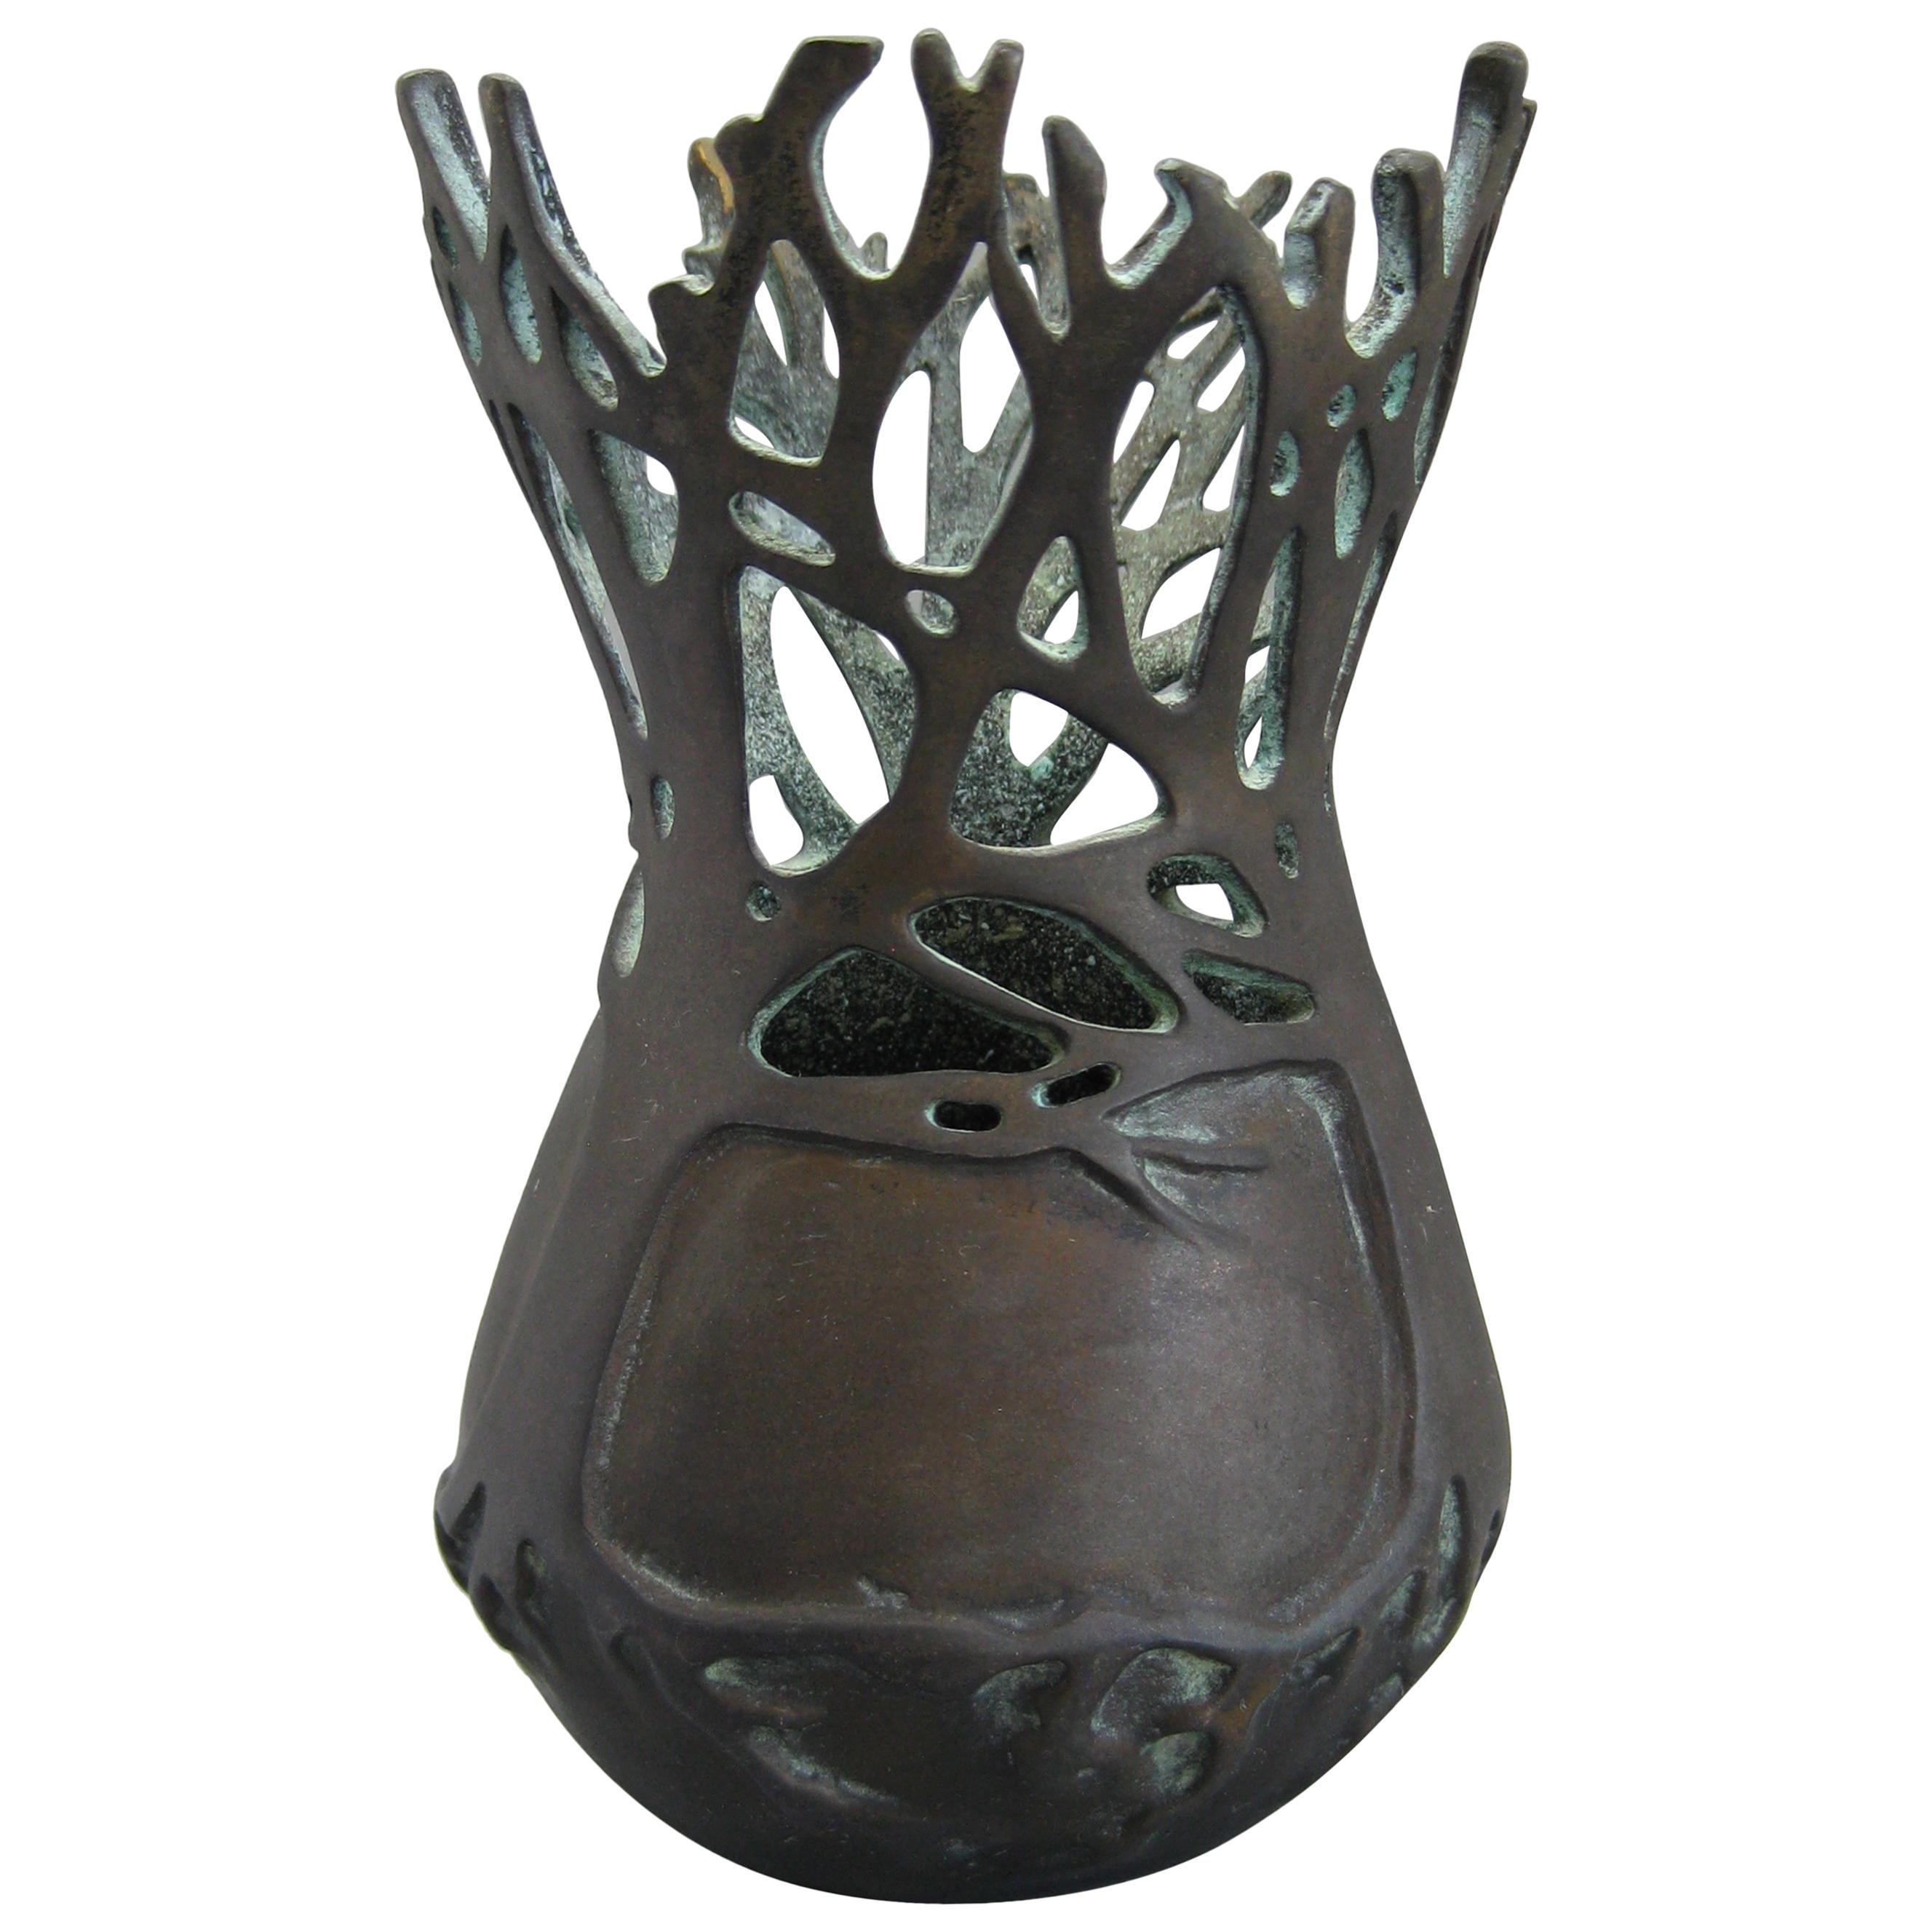 2001 Carol Alleman Organic Midcentury Bronze Vase Vessel Sculpture Limited 75 For Sale